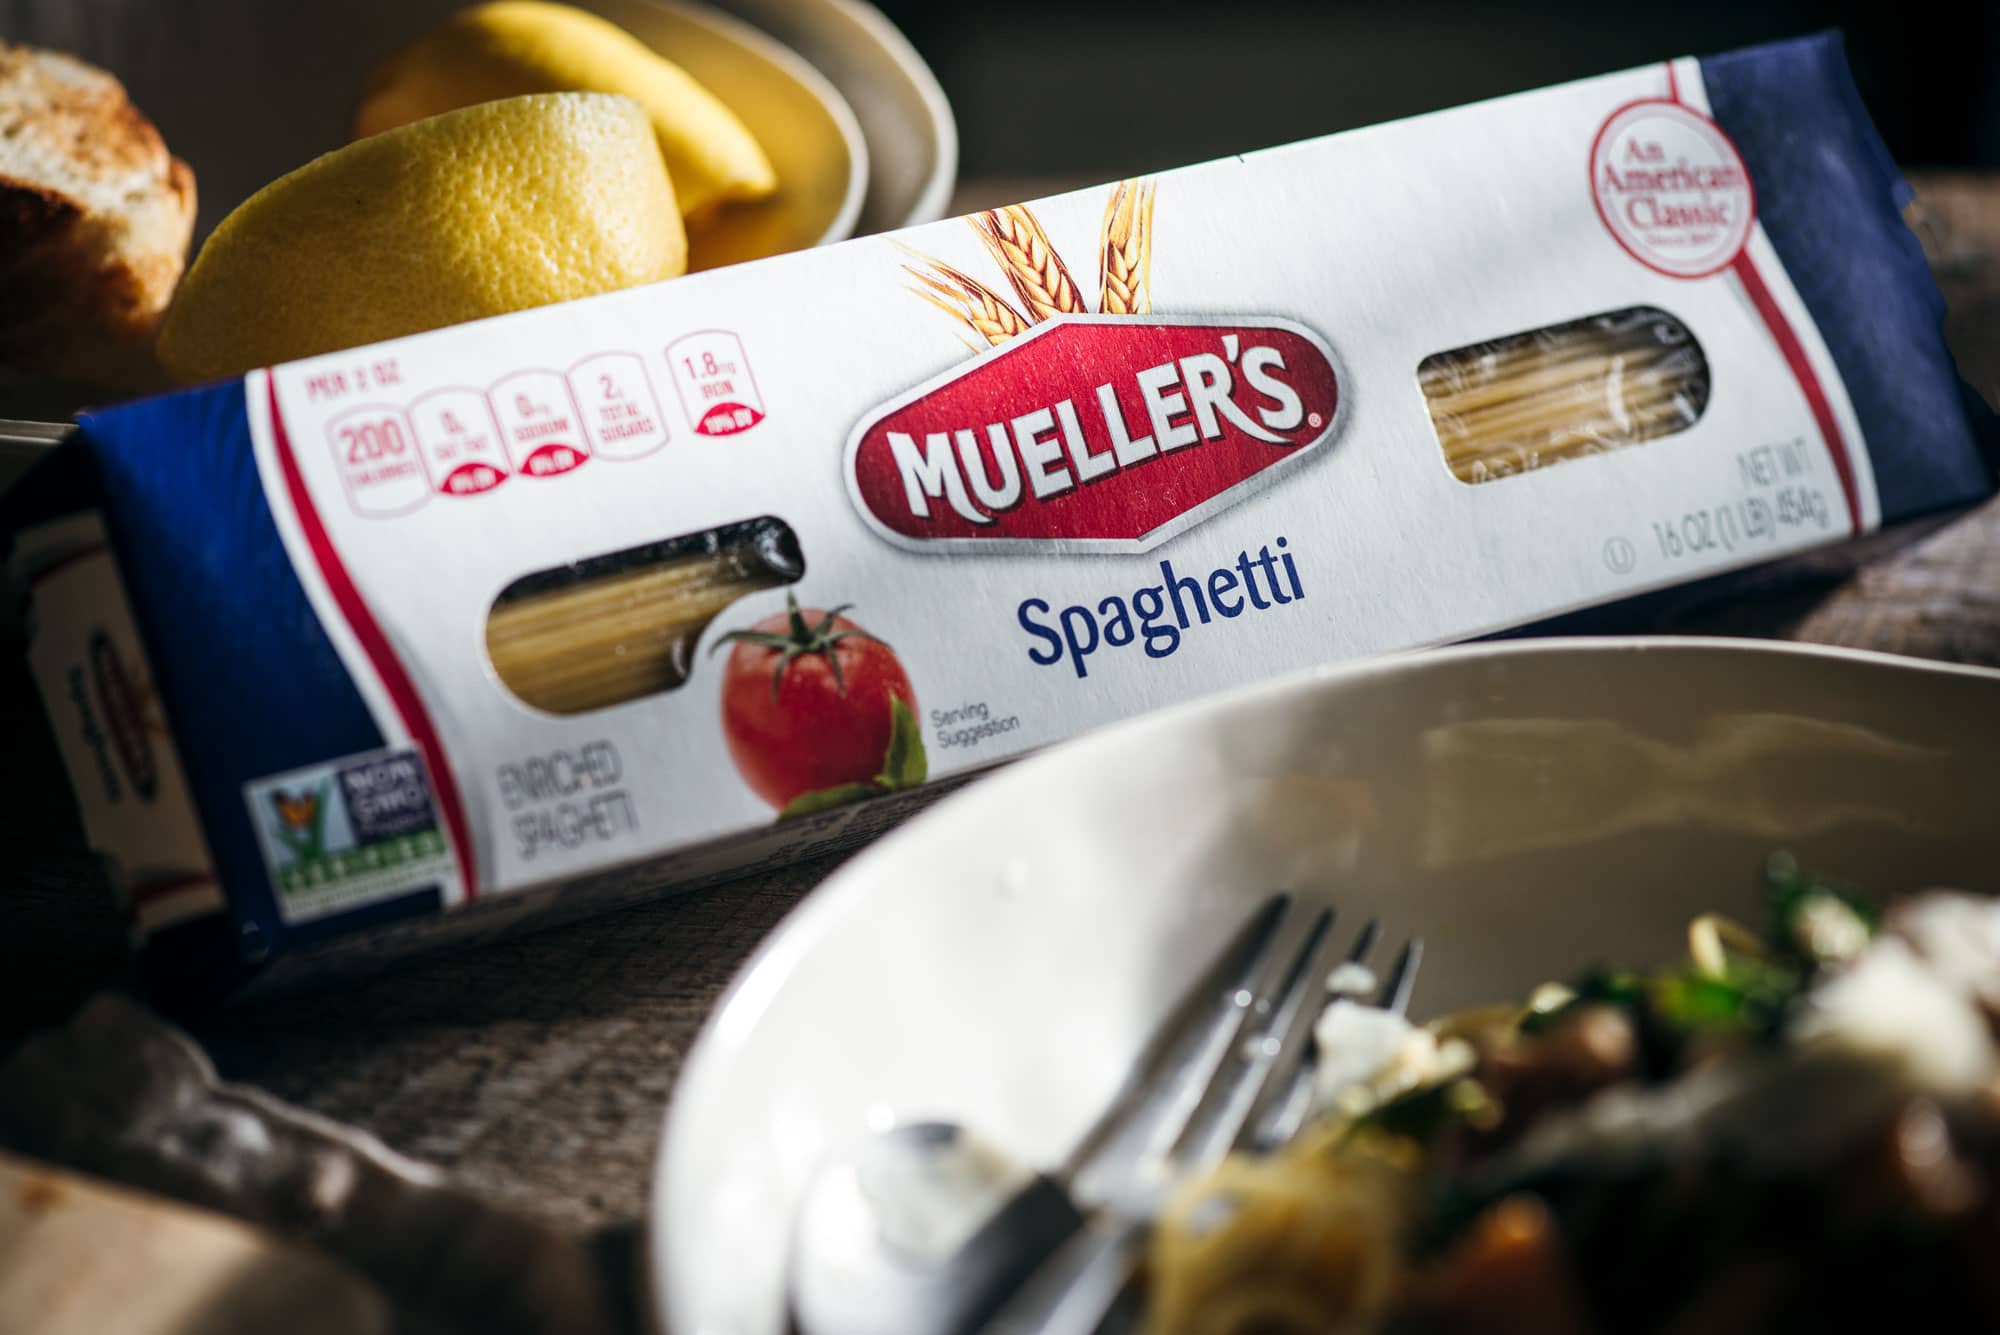 Box of Muellers spaghetti